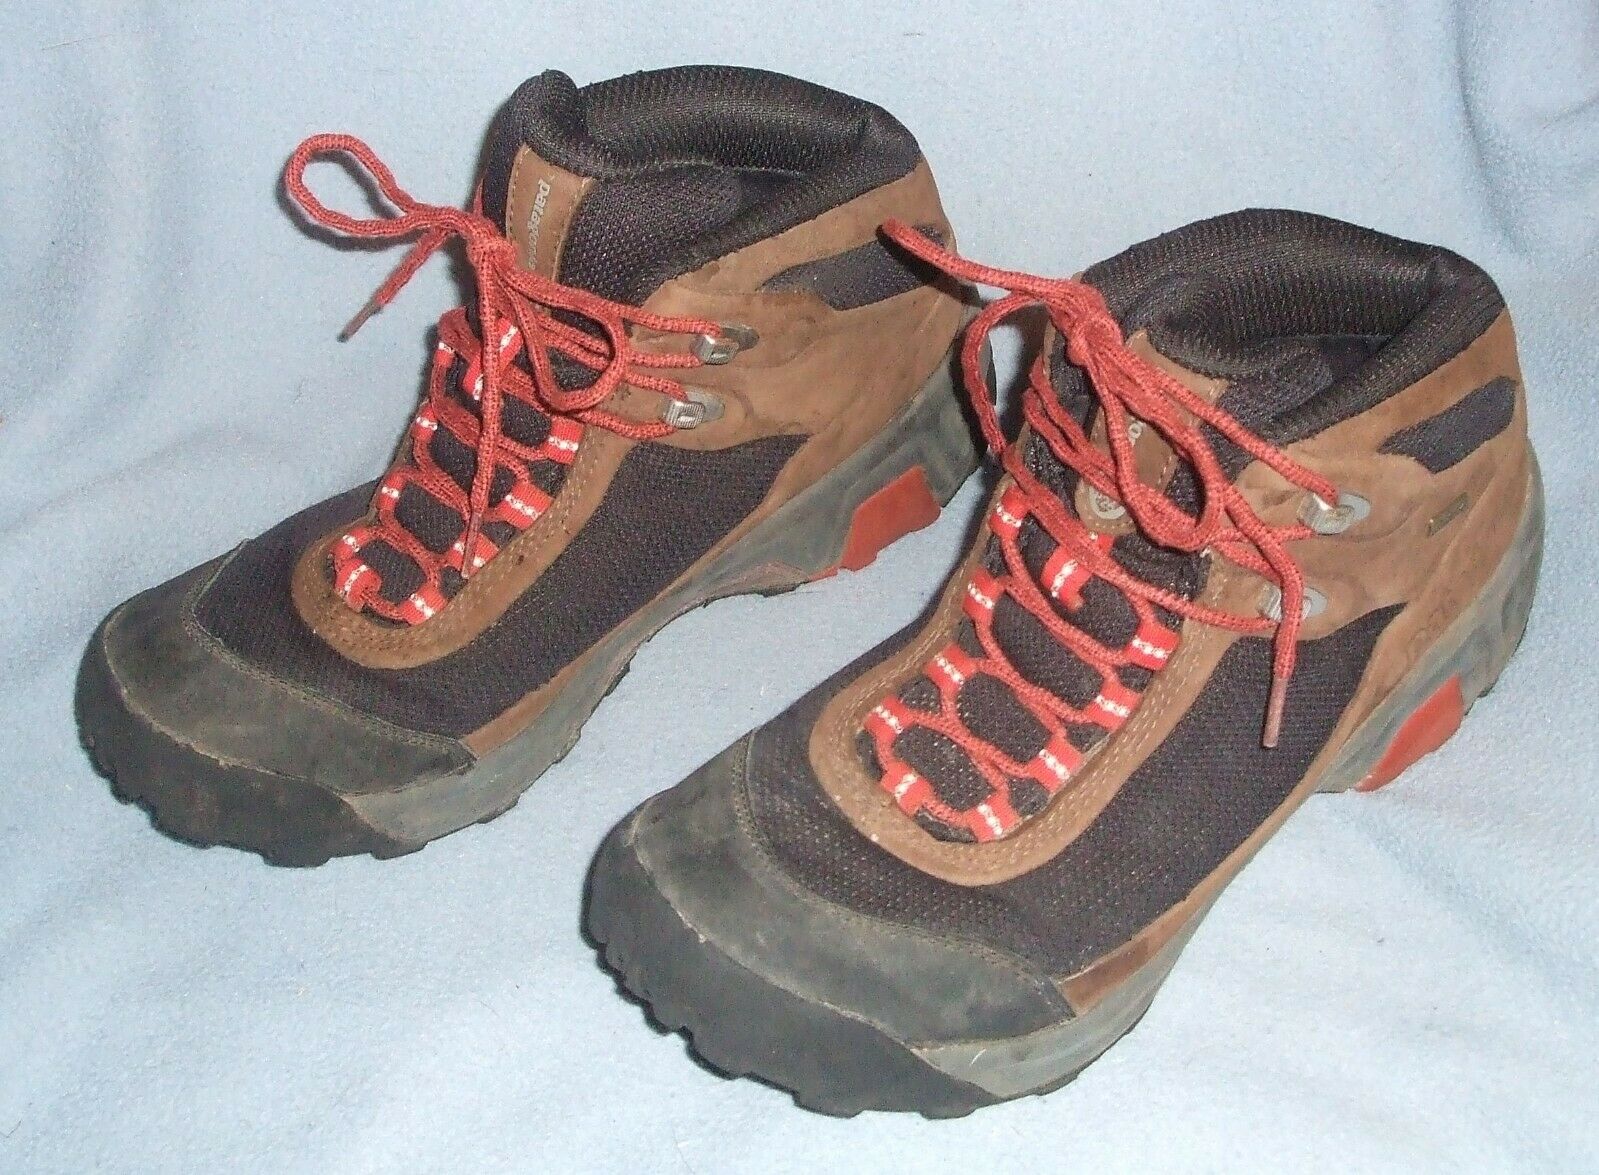 Patagonia Men's P26 Hiking Boots - Size US 9.5 EUR 42.5 T80515 Gore-Tex Vibram